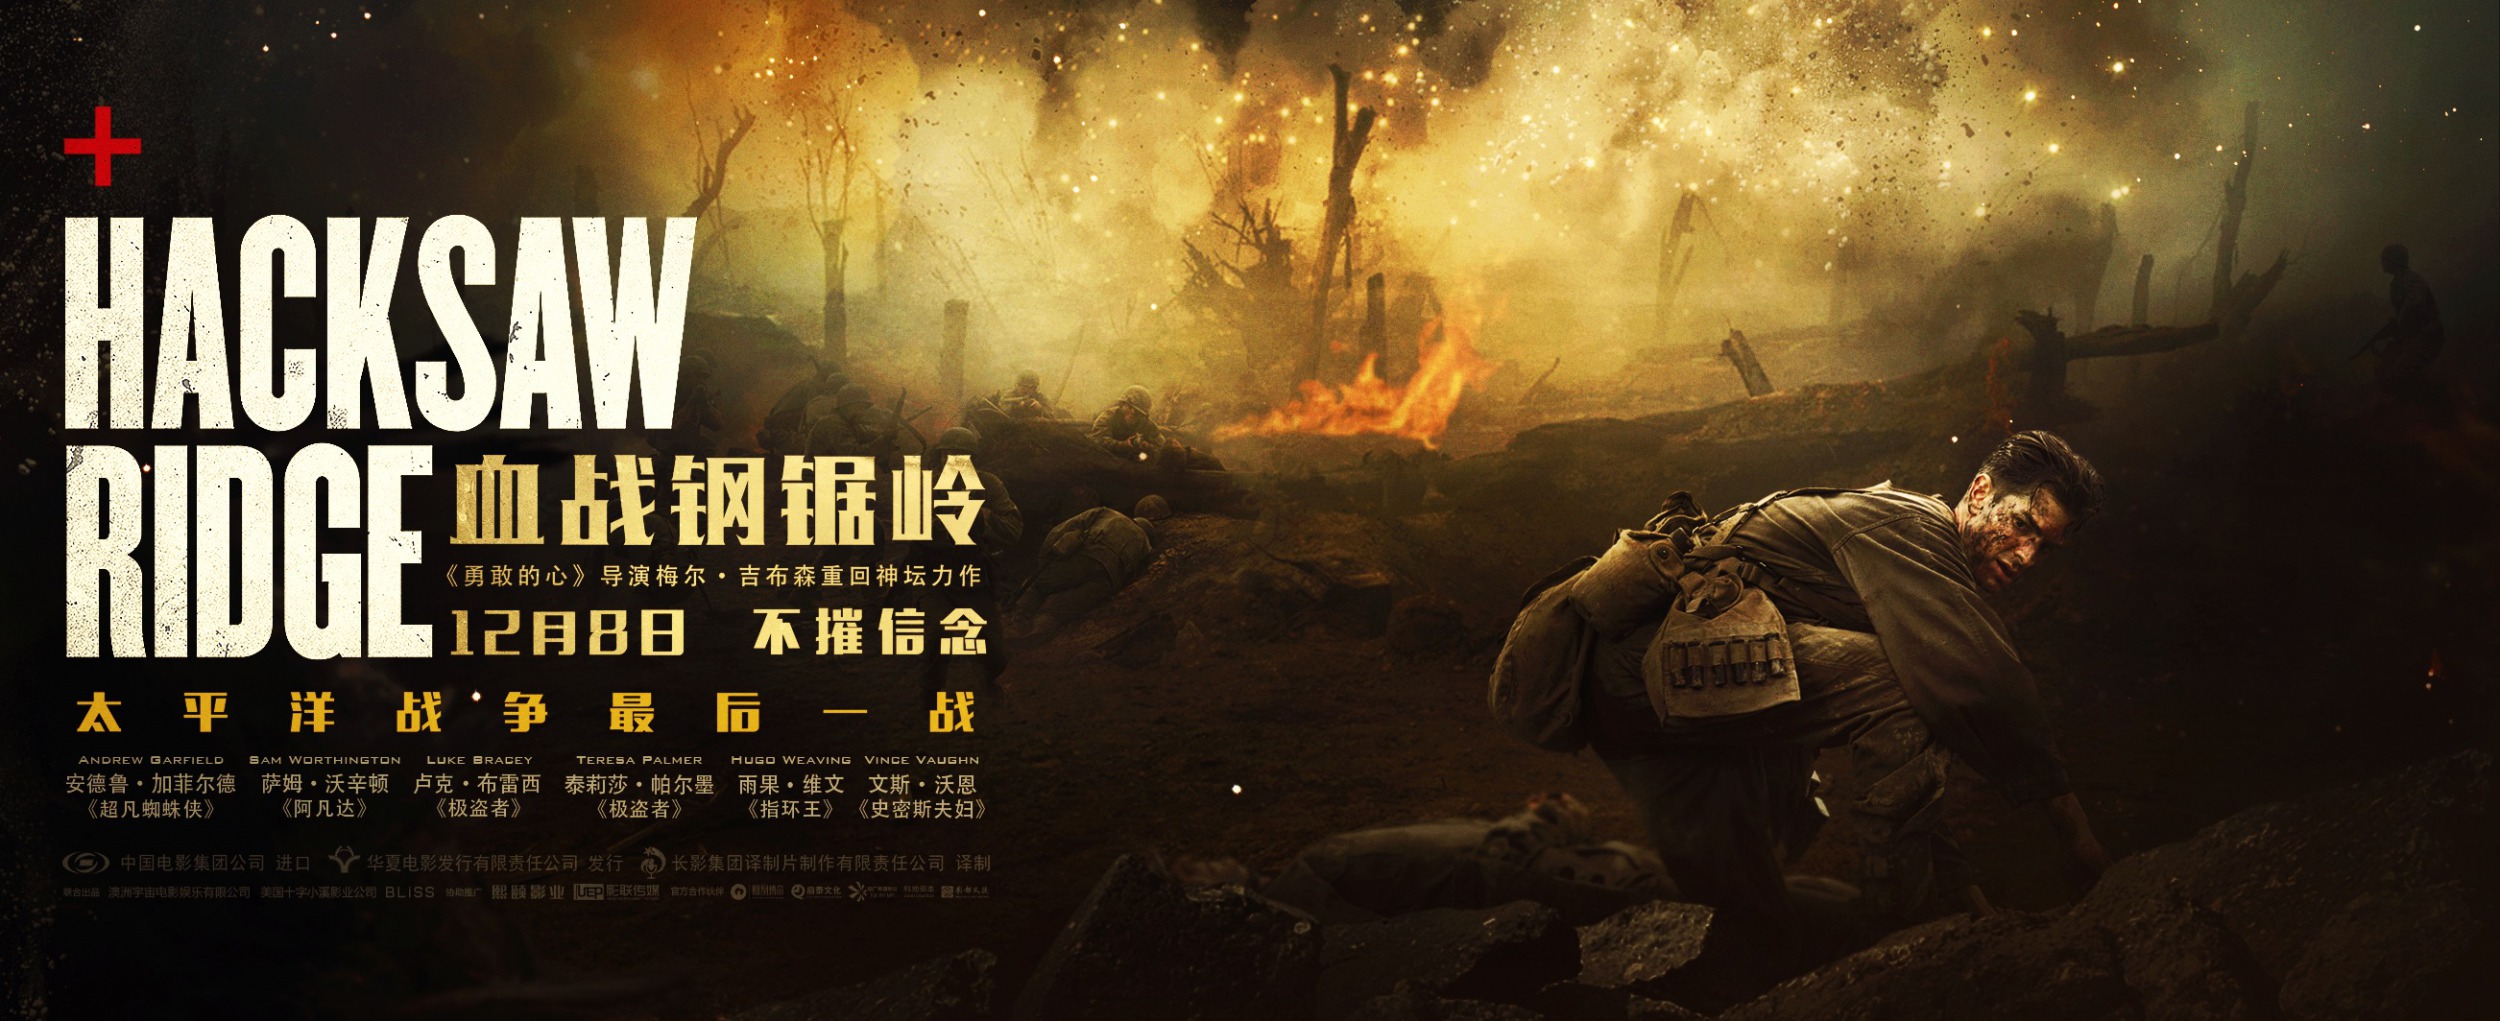 Mega Sized Movie Poster Image for Hacksaw Ridge (#8 of 19)